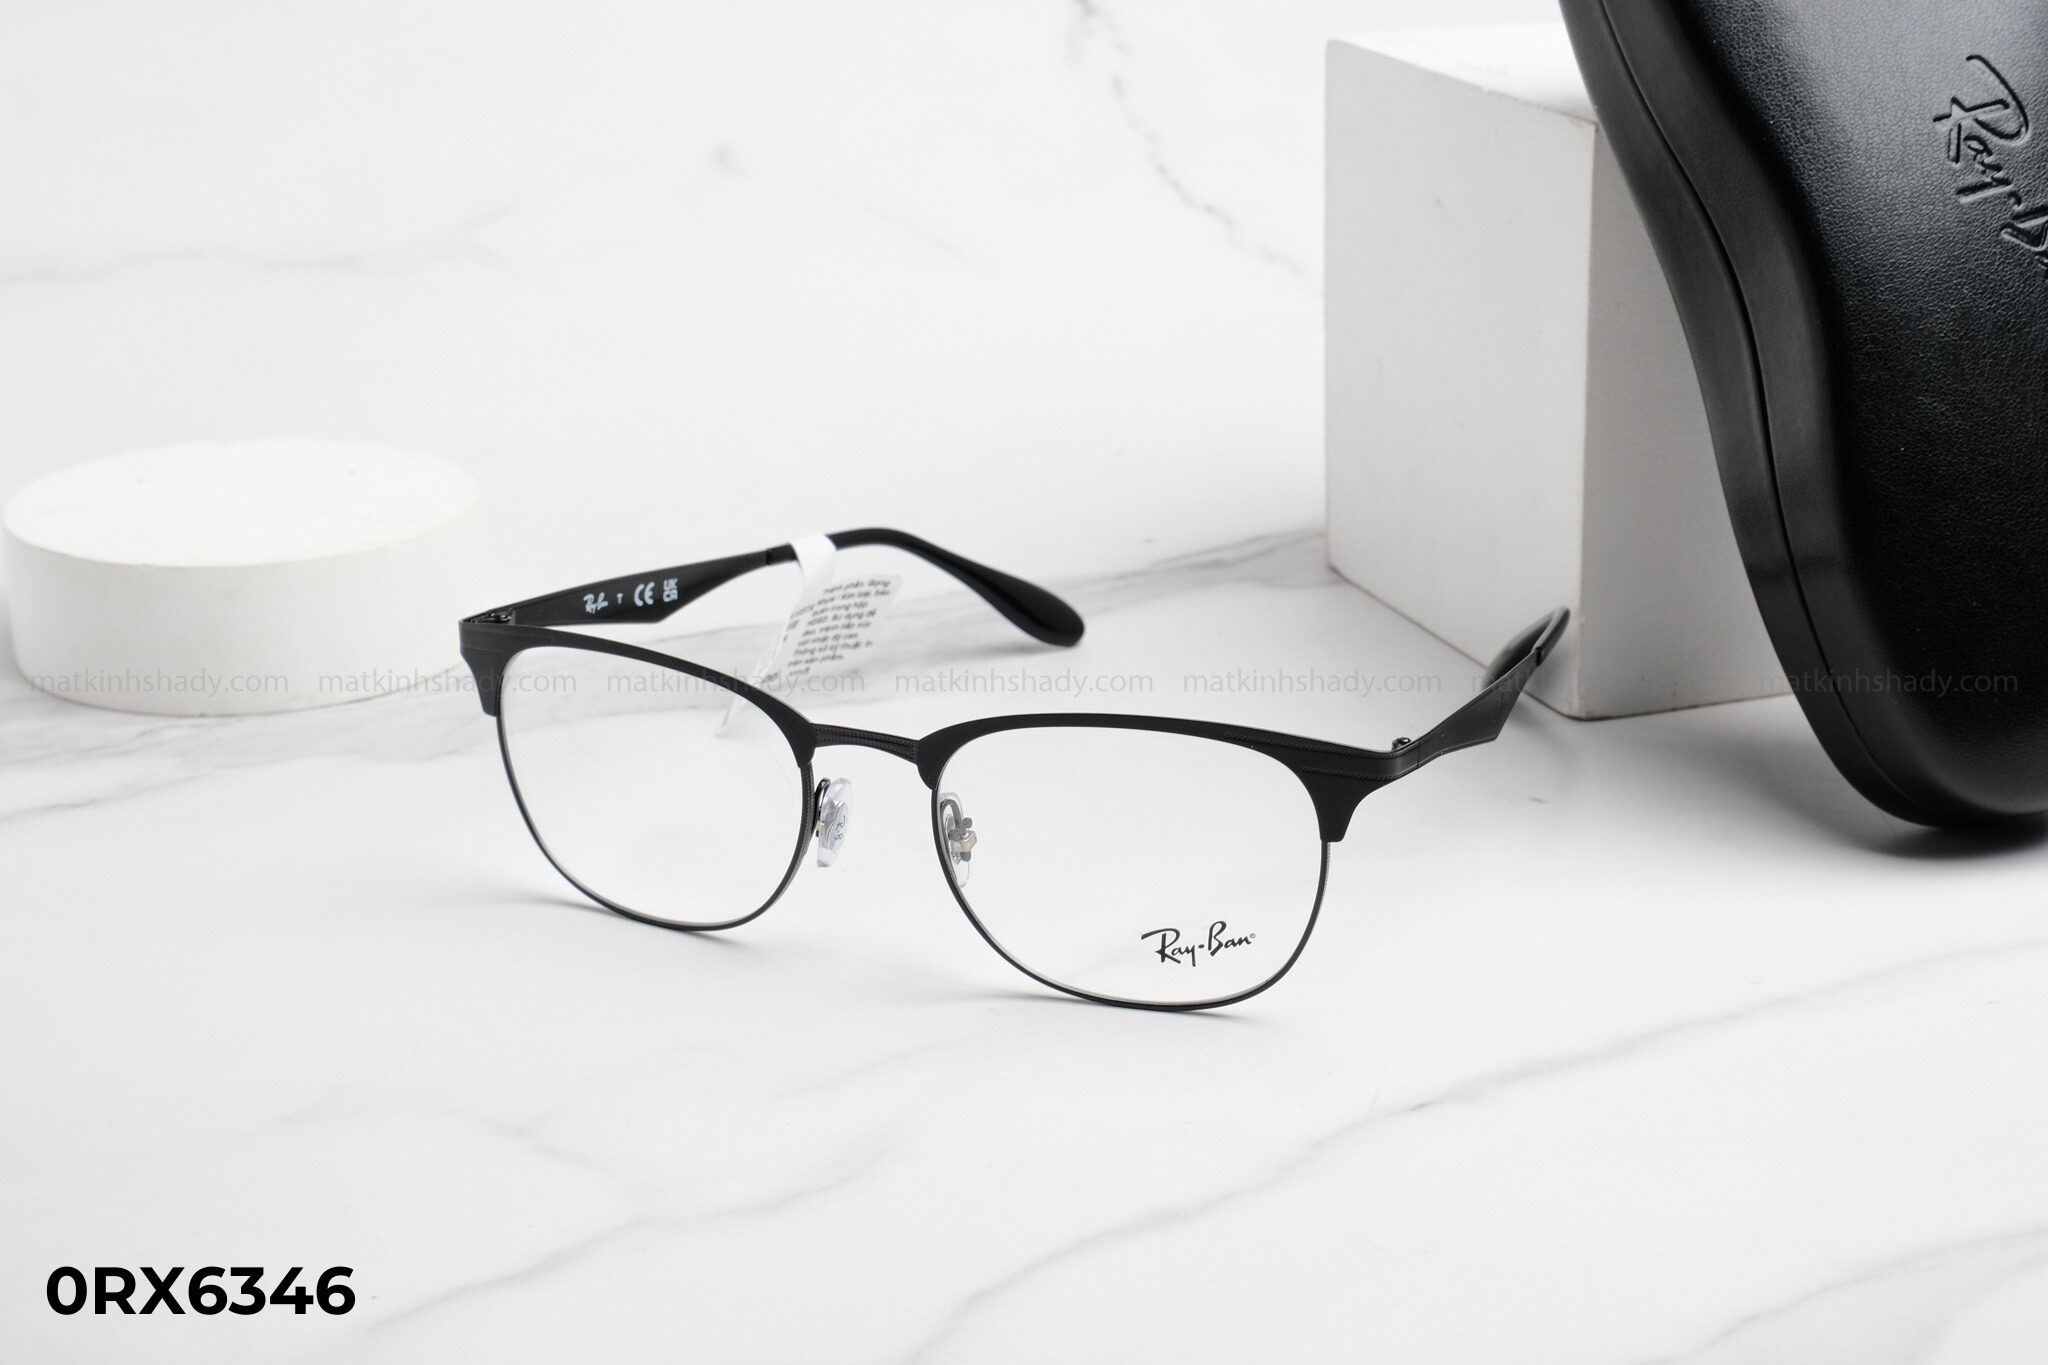  Rayban Eyewear - Glasses - 0RX6346 